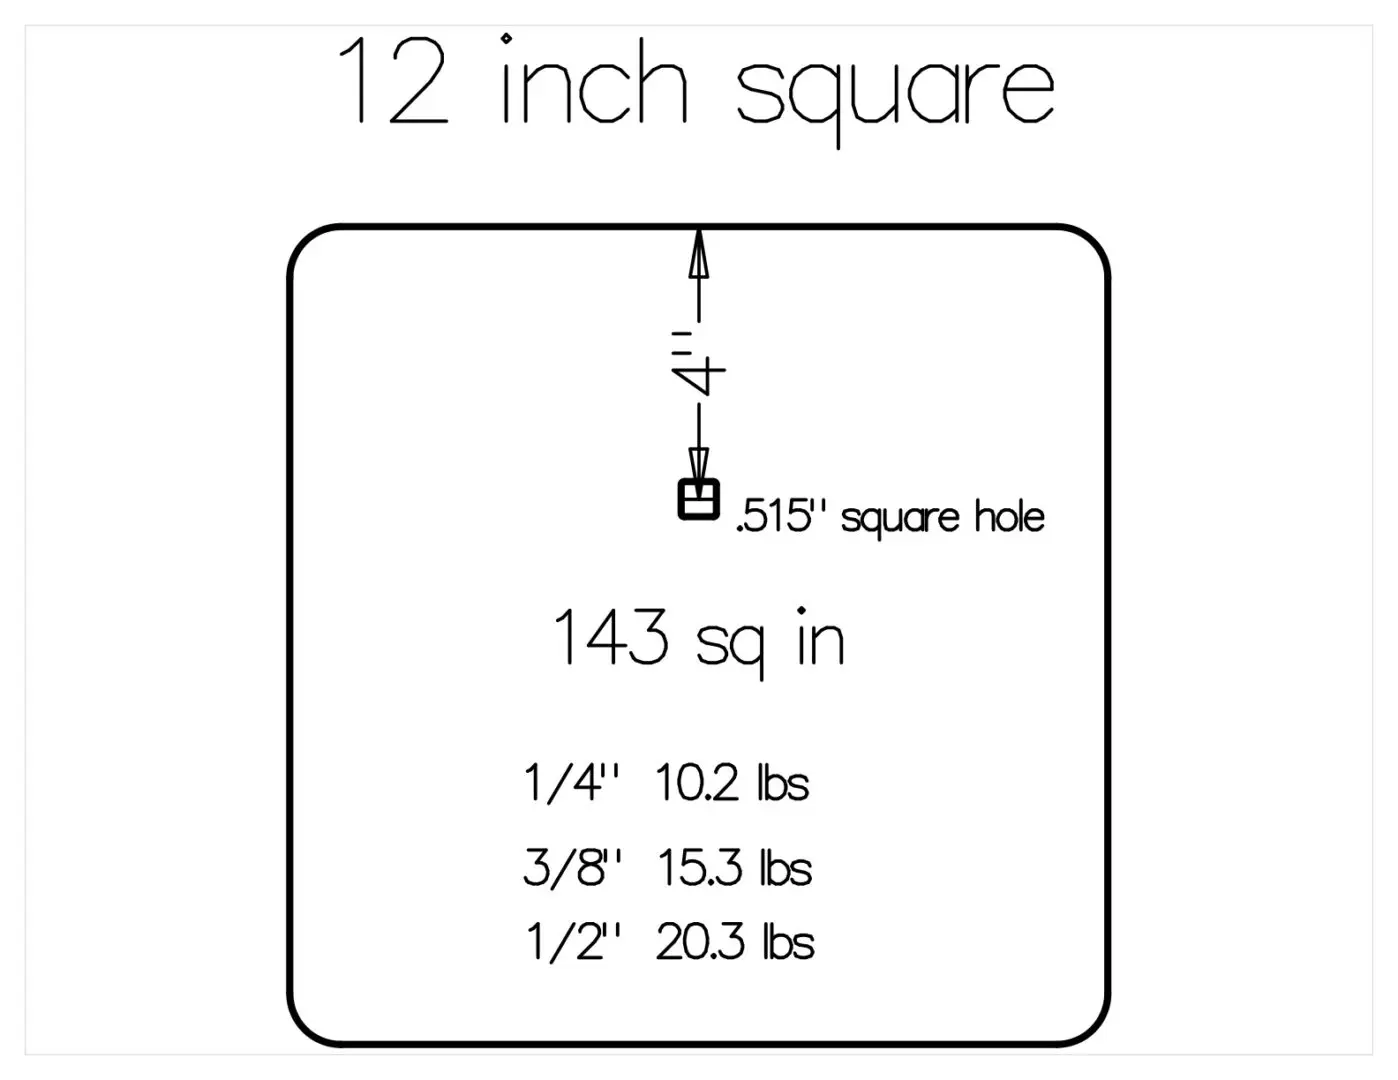 12 inch square AR500 statistics